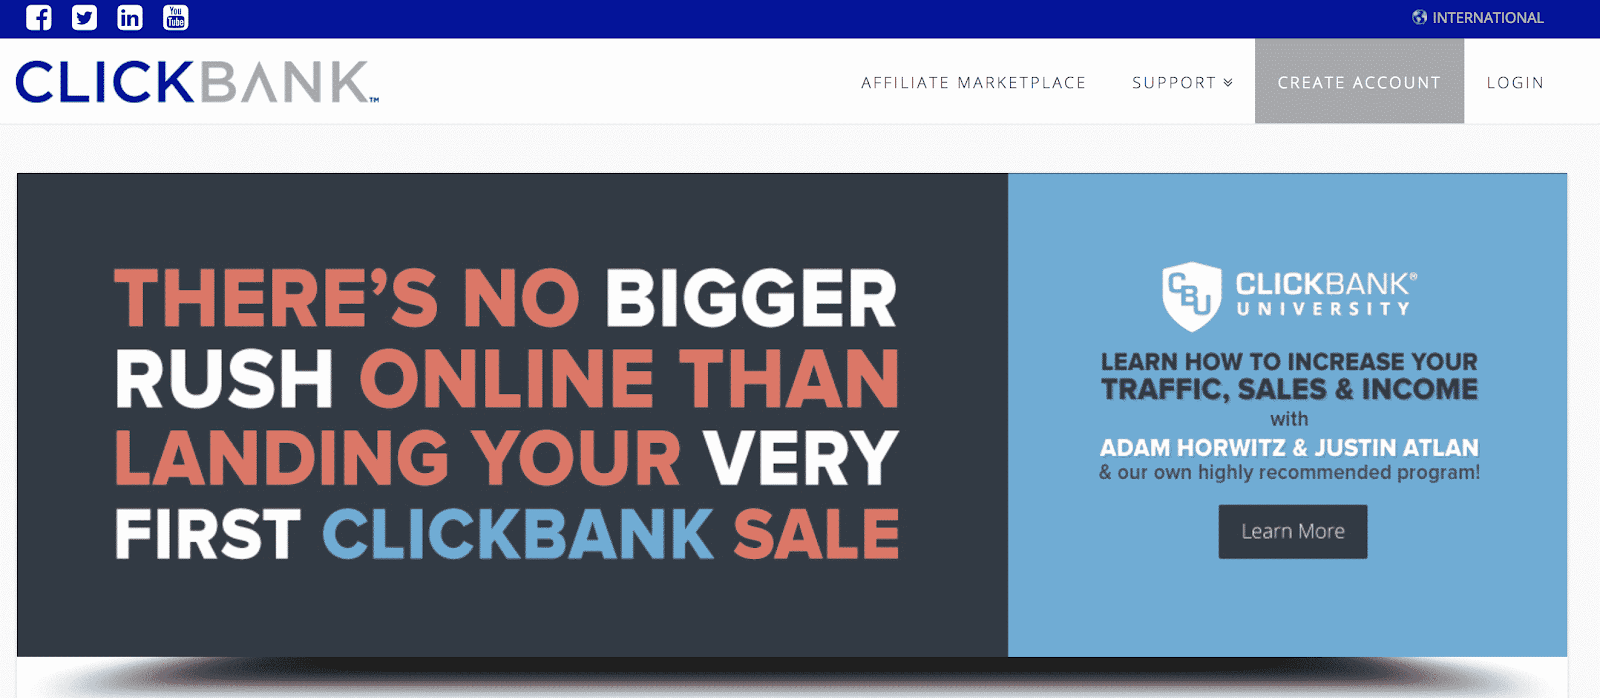 Clickbank Affiliate Marketing Website